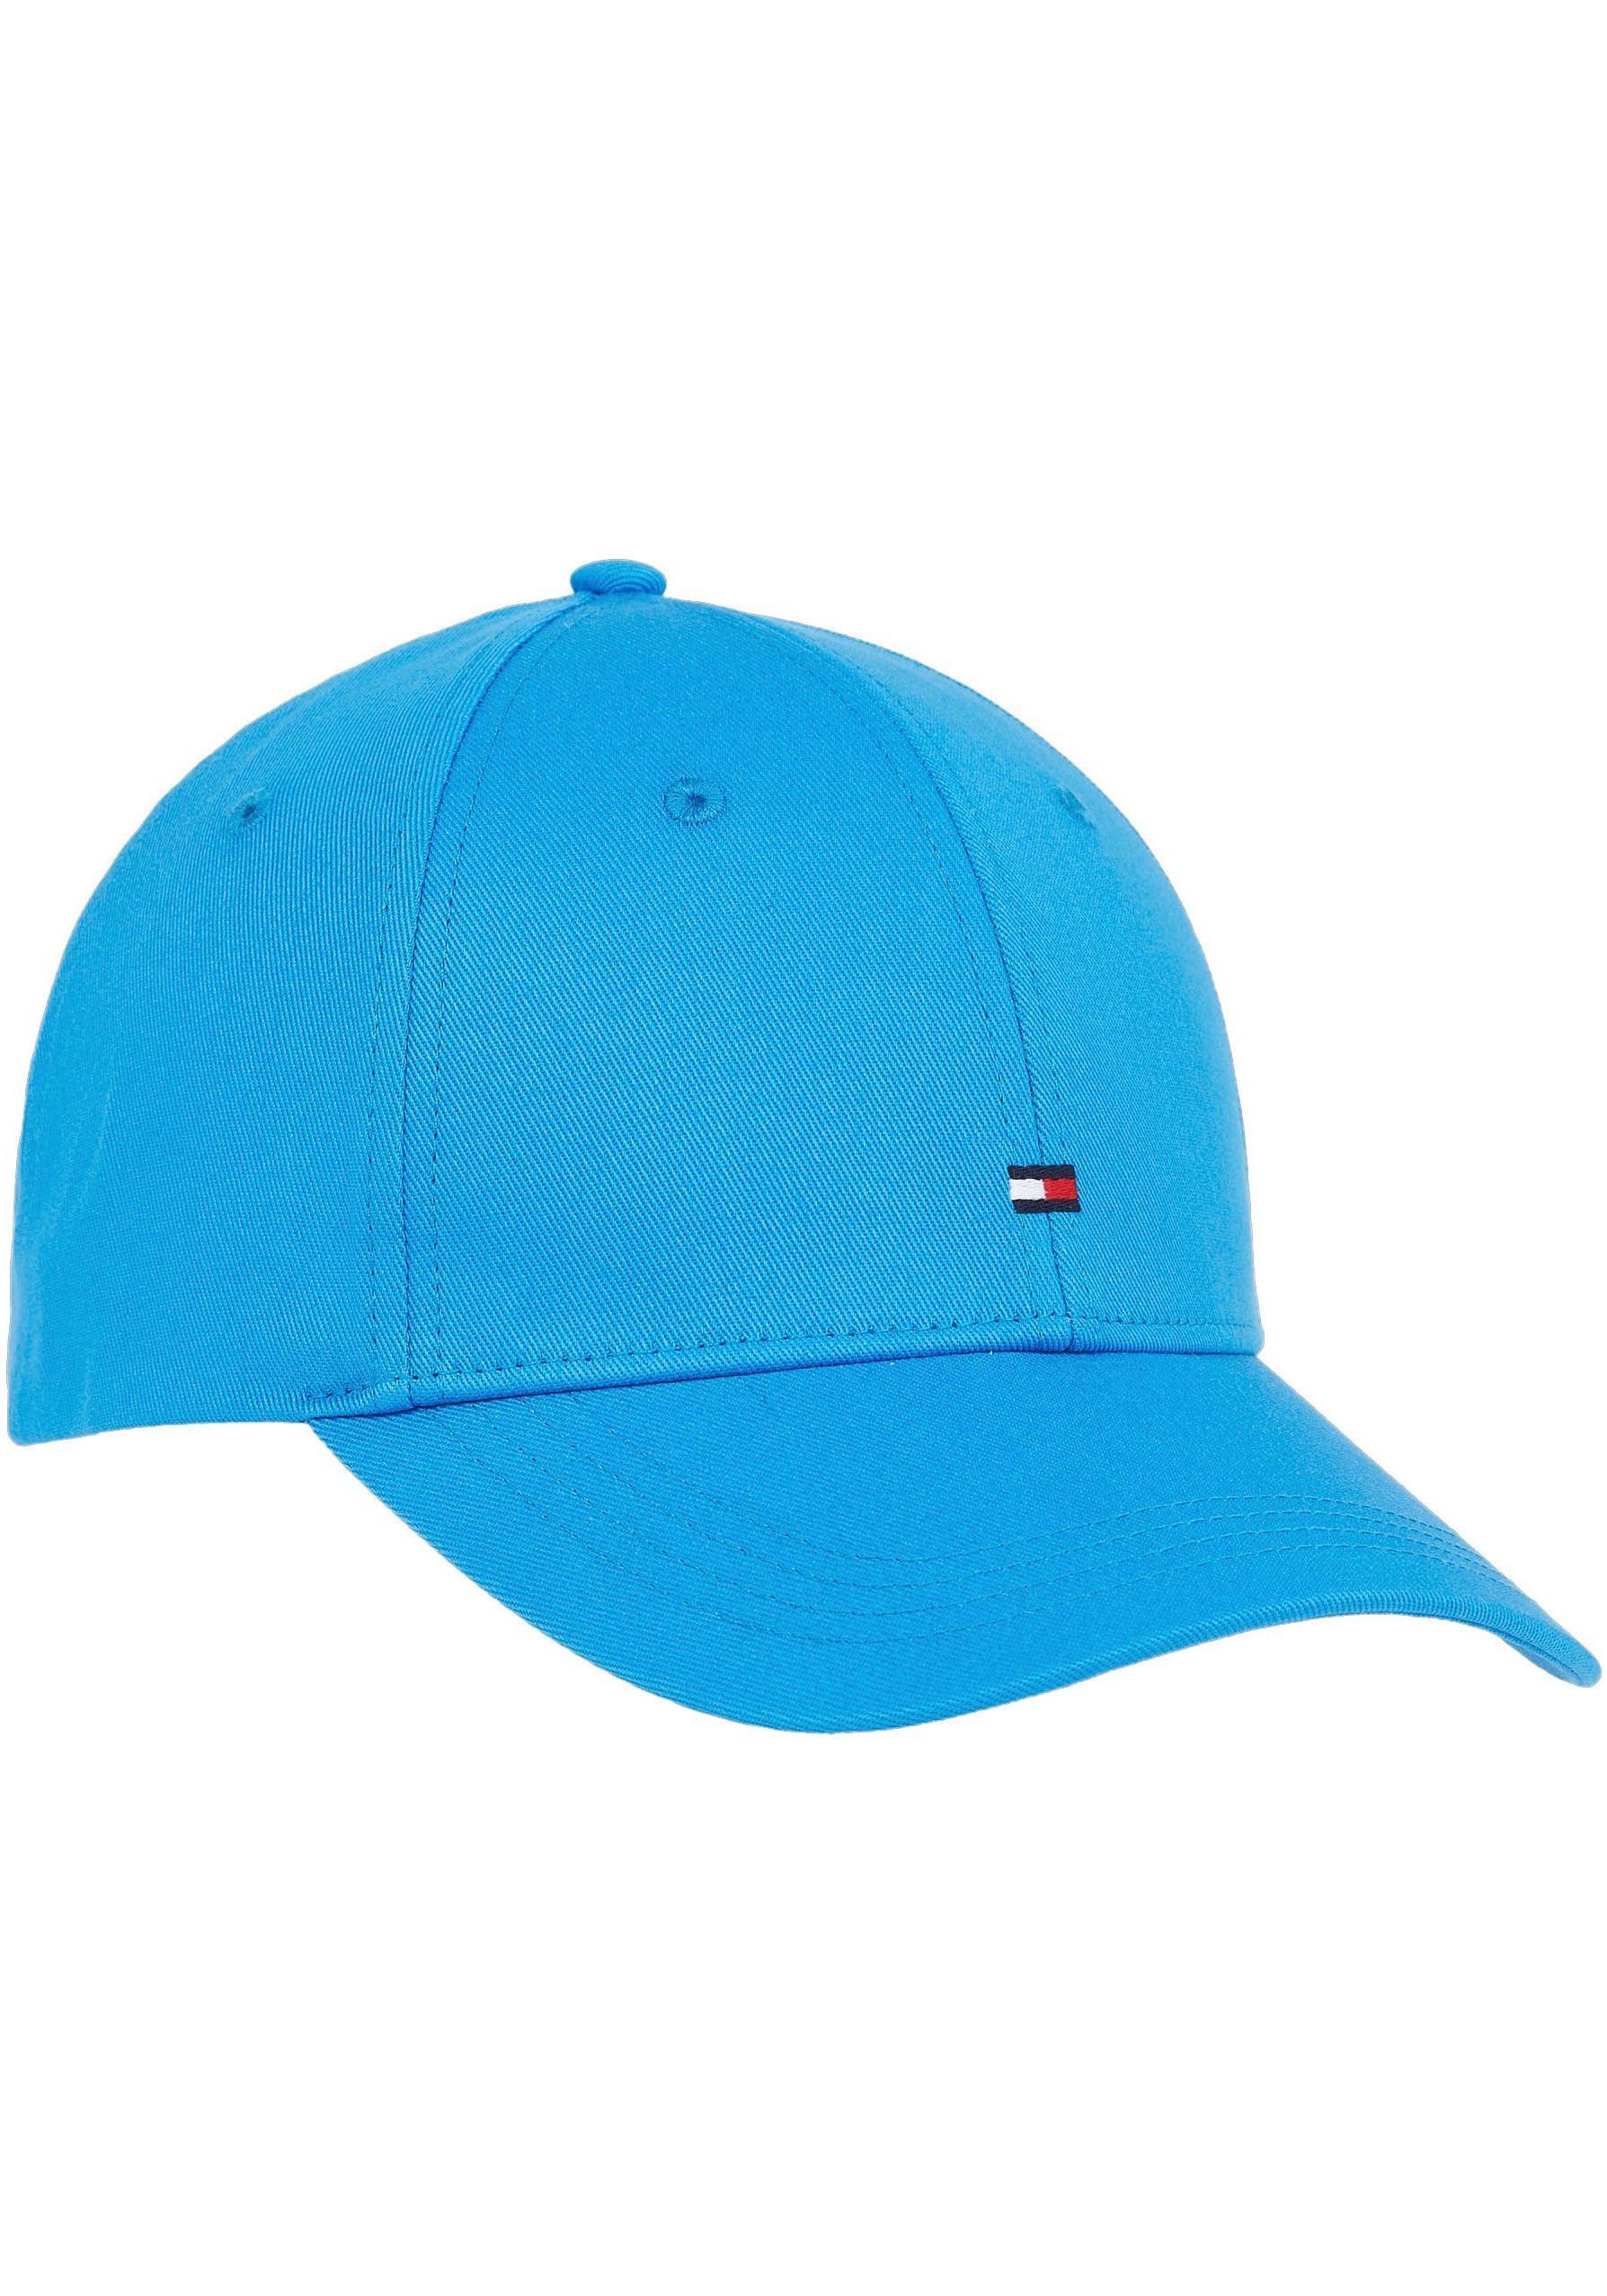 aufgesticktem FLAG Blue Cap Tommy TH Cap Hilfiger CAP Shocking mit Logo-Branding Baseball